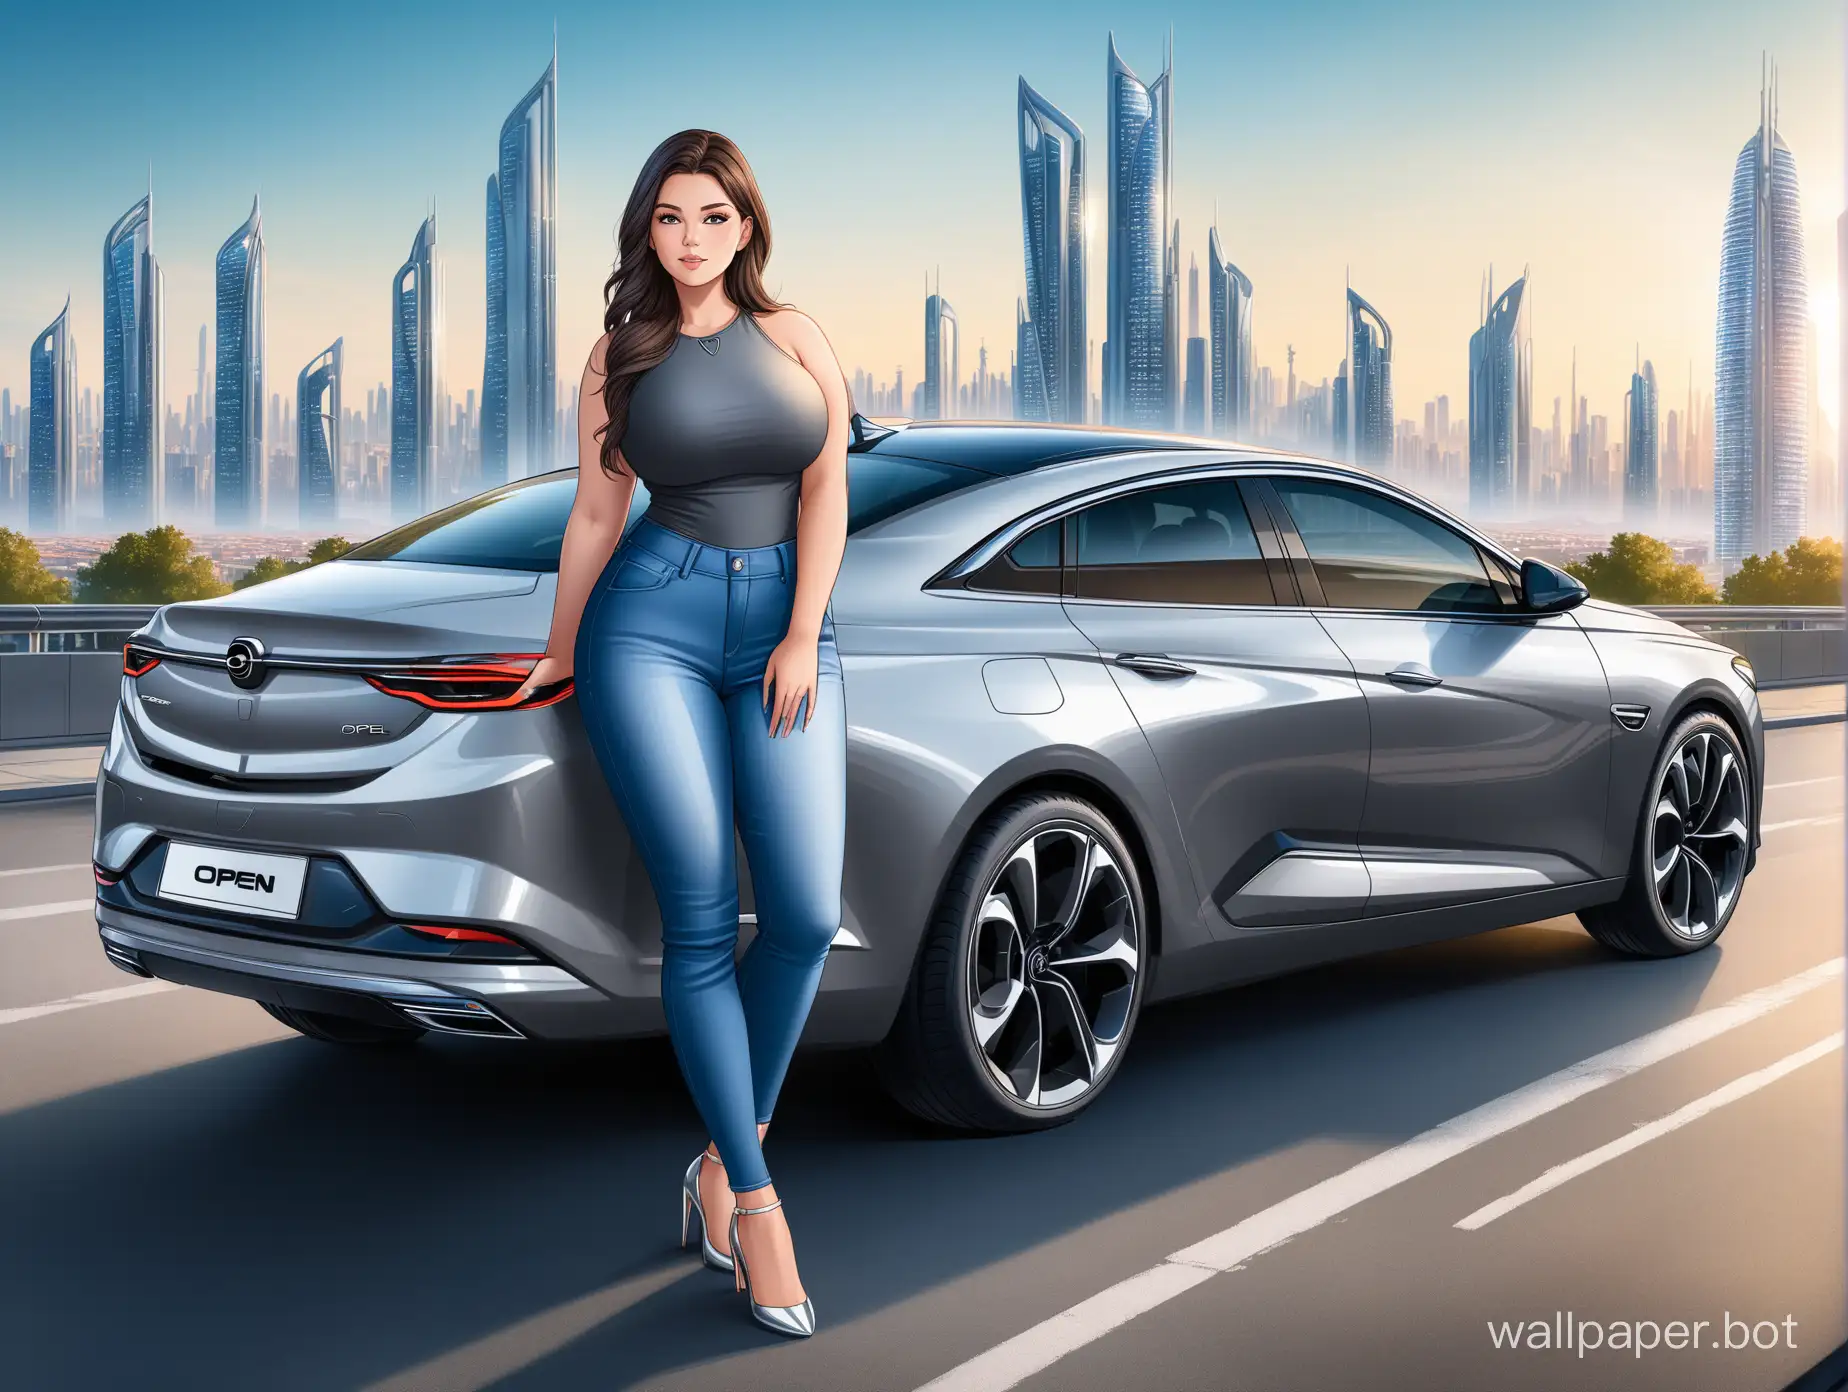 Stylish-Brunette-Woman-Posing-with-Opel-Insignia-Grand-Sport-in-Futuristic-Cityscape